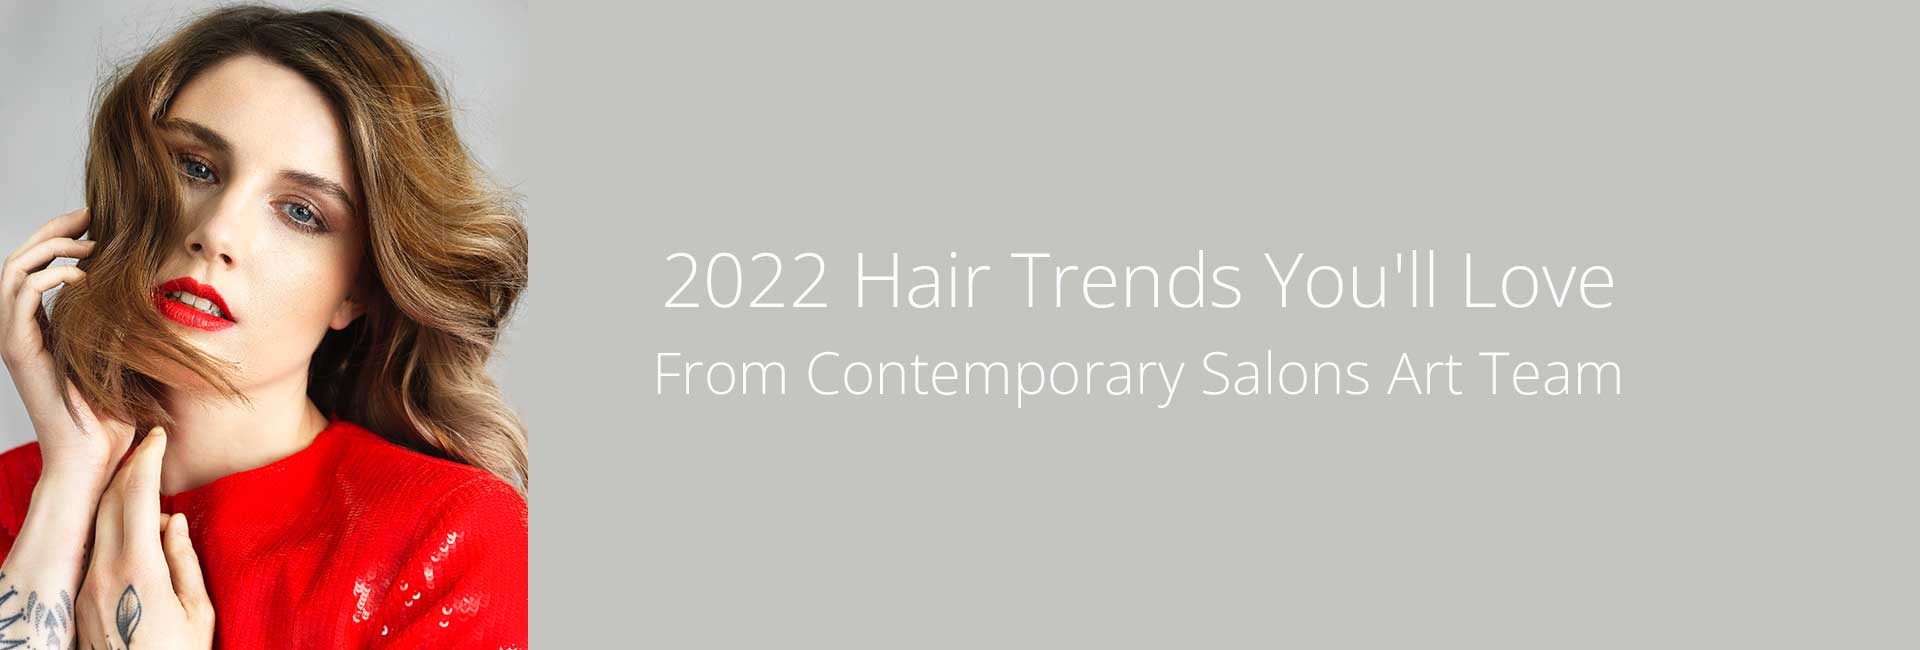 2022 hair trends banner